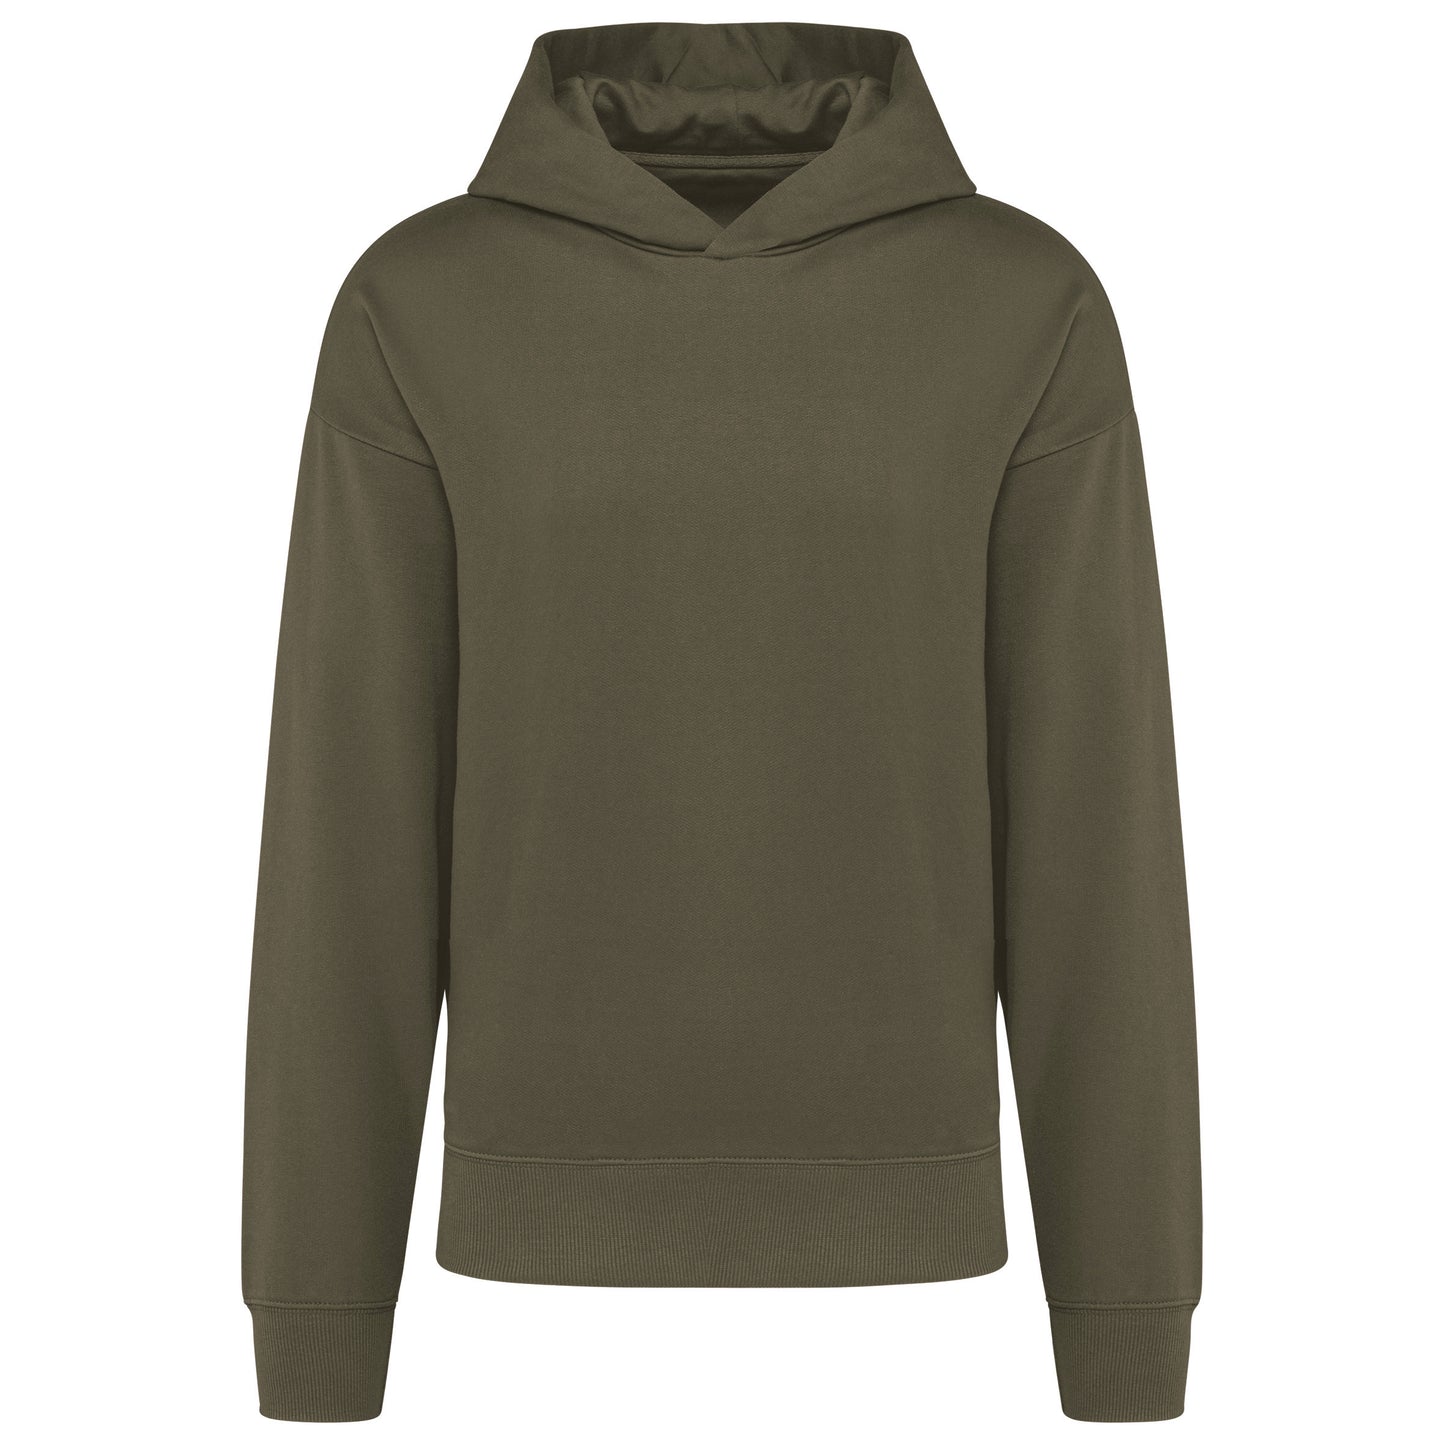 K4018 - Sweatshirt à capuche molleton oversize unisexe